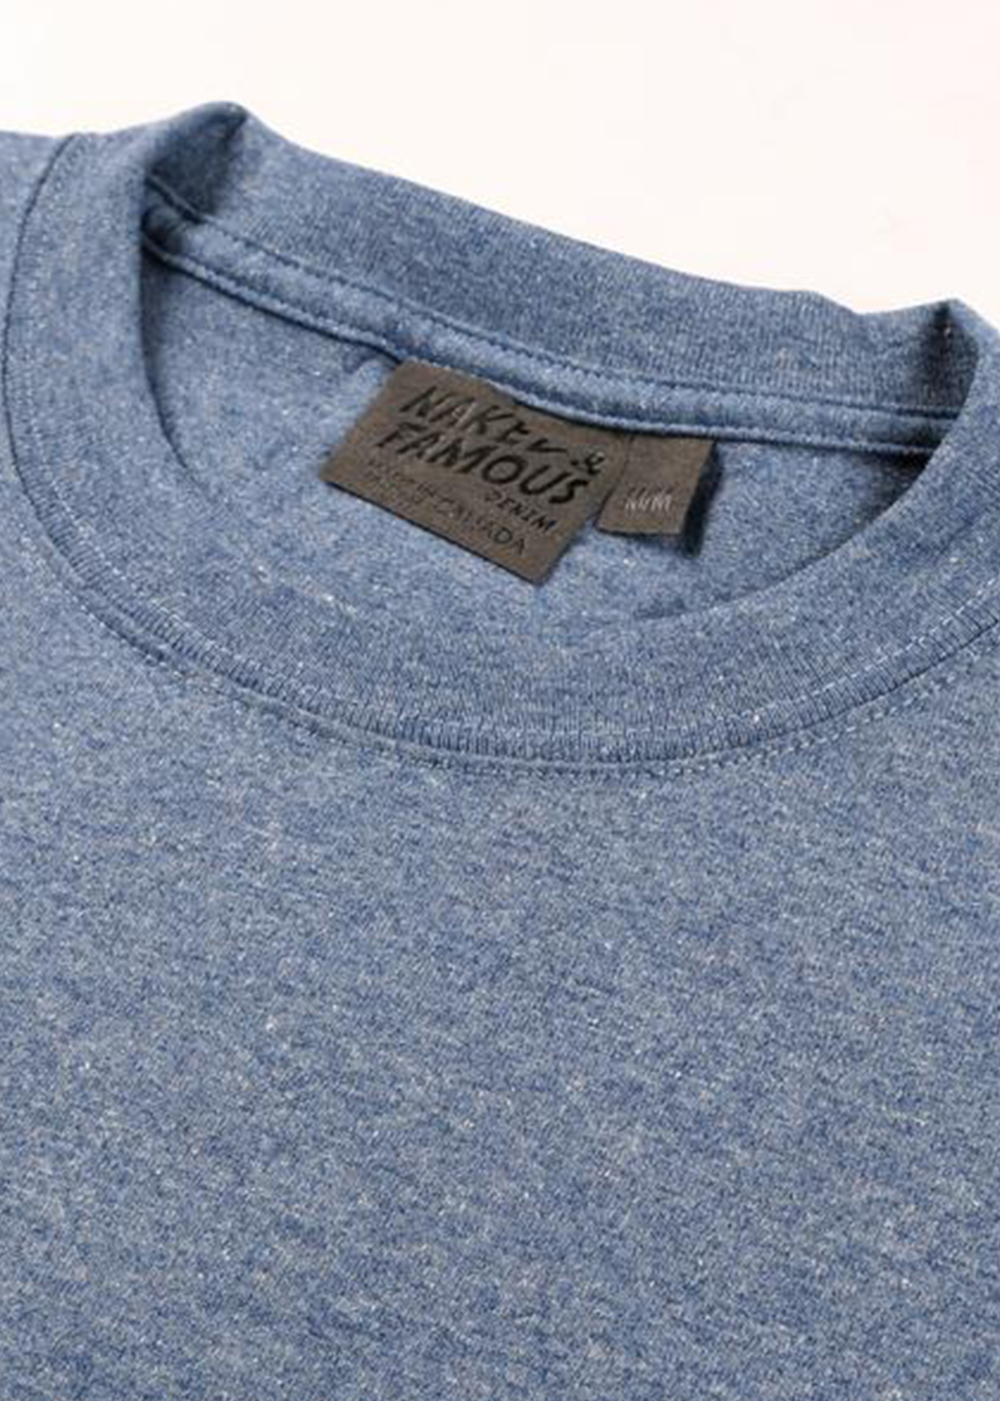 Circular Knit T-Shirt - Blue - Naked and Famous Denim Canada - Danali